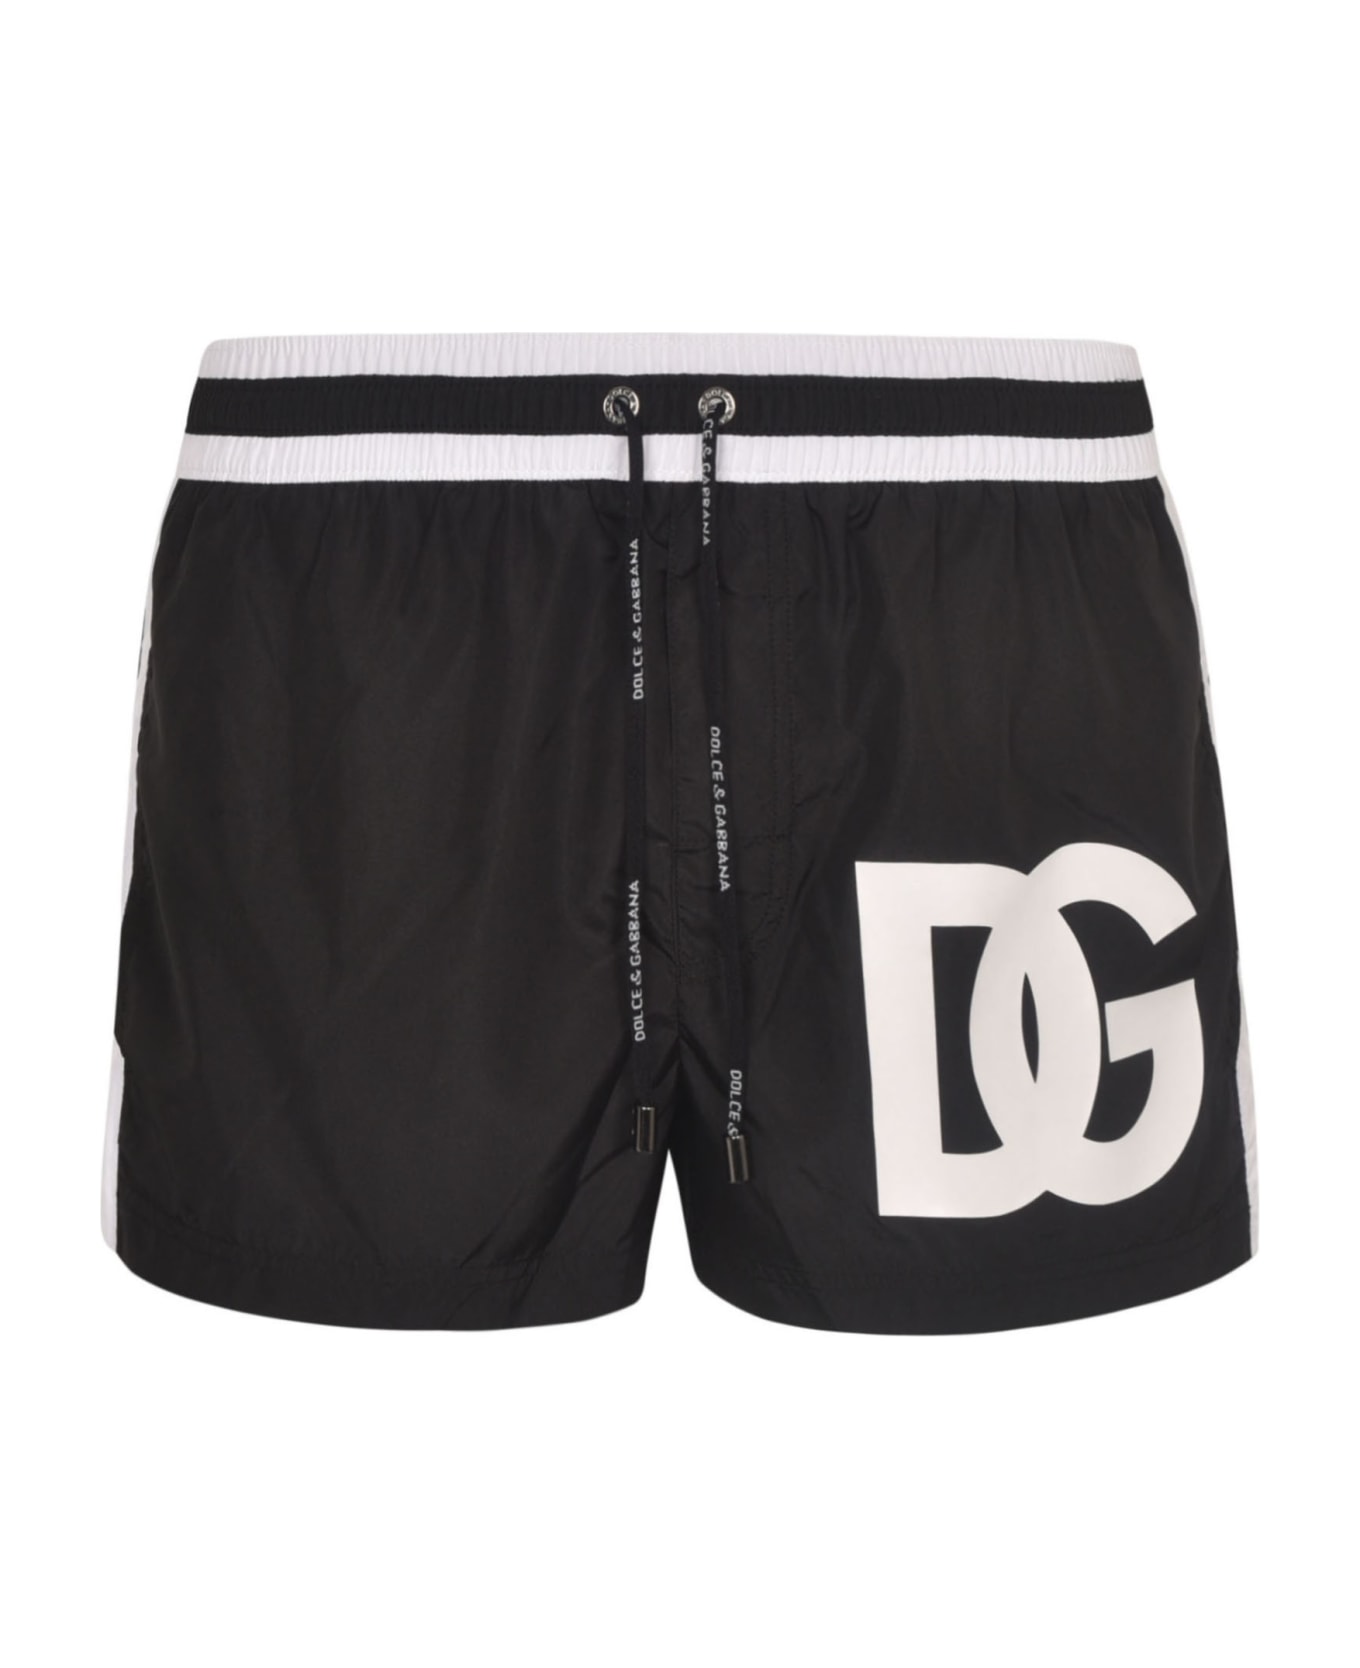 Dolce & Gabbana Drawstring Waist Logo Boxer Shorts - Black/White